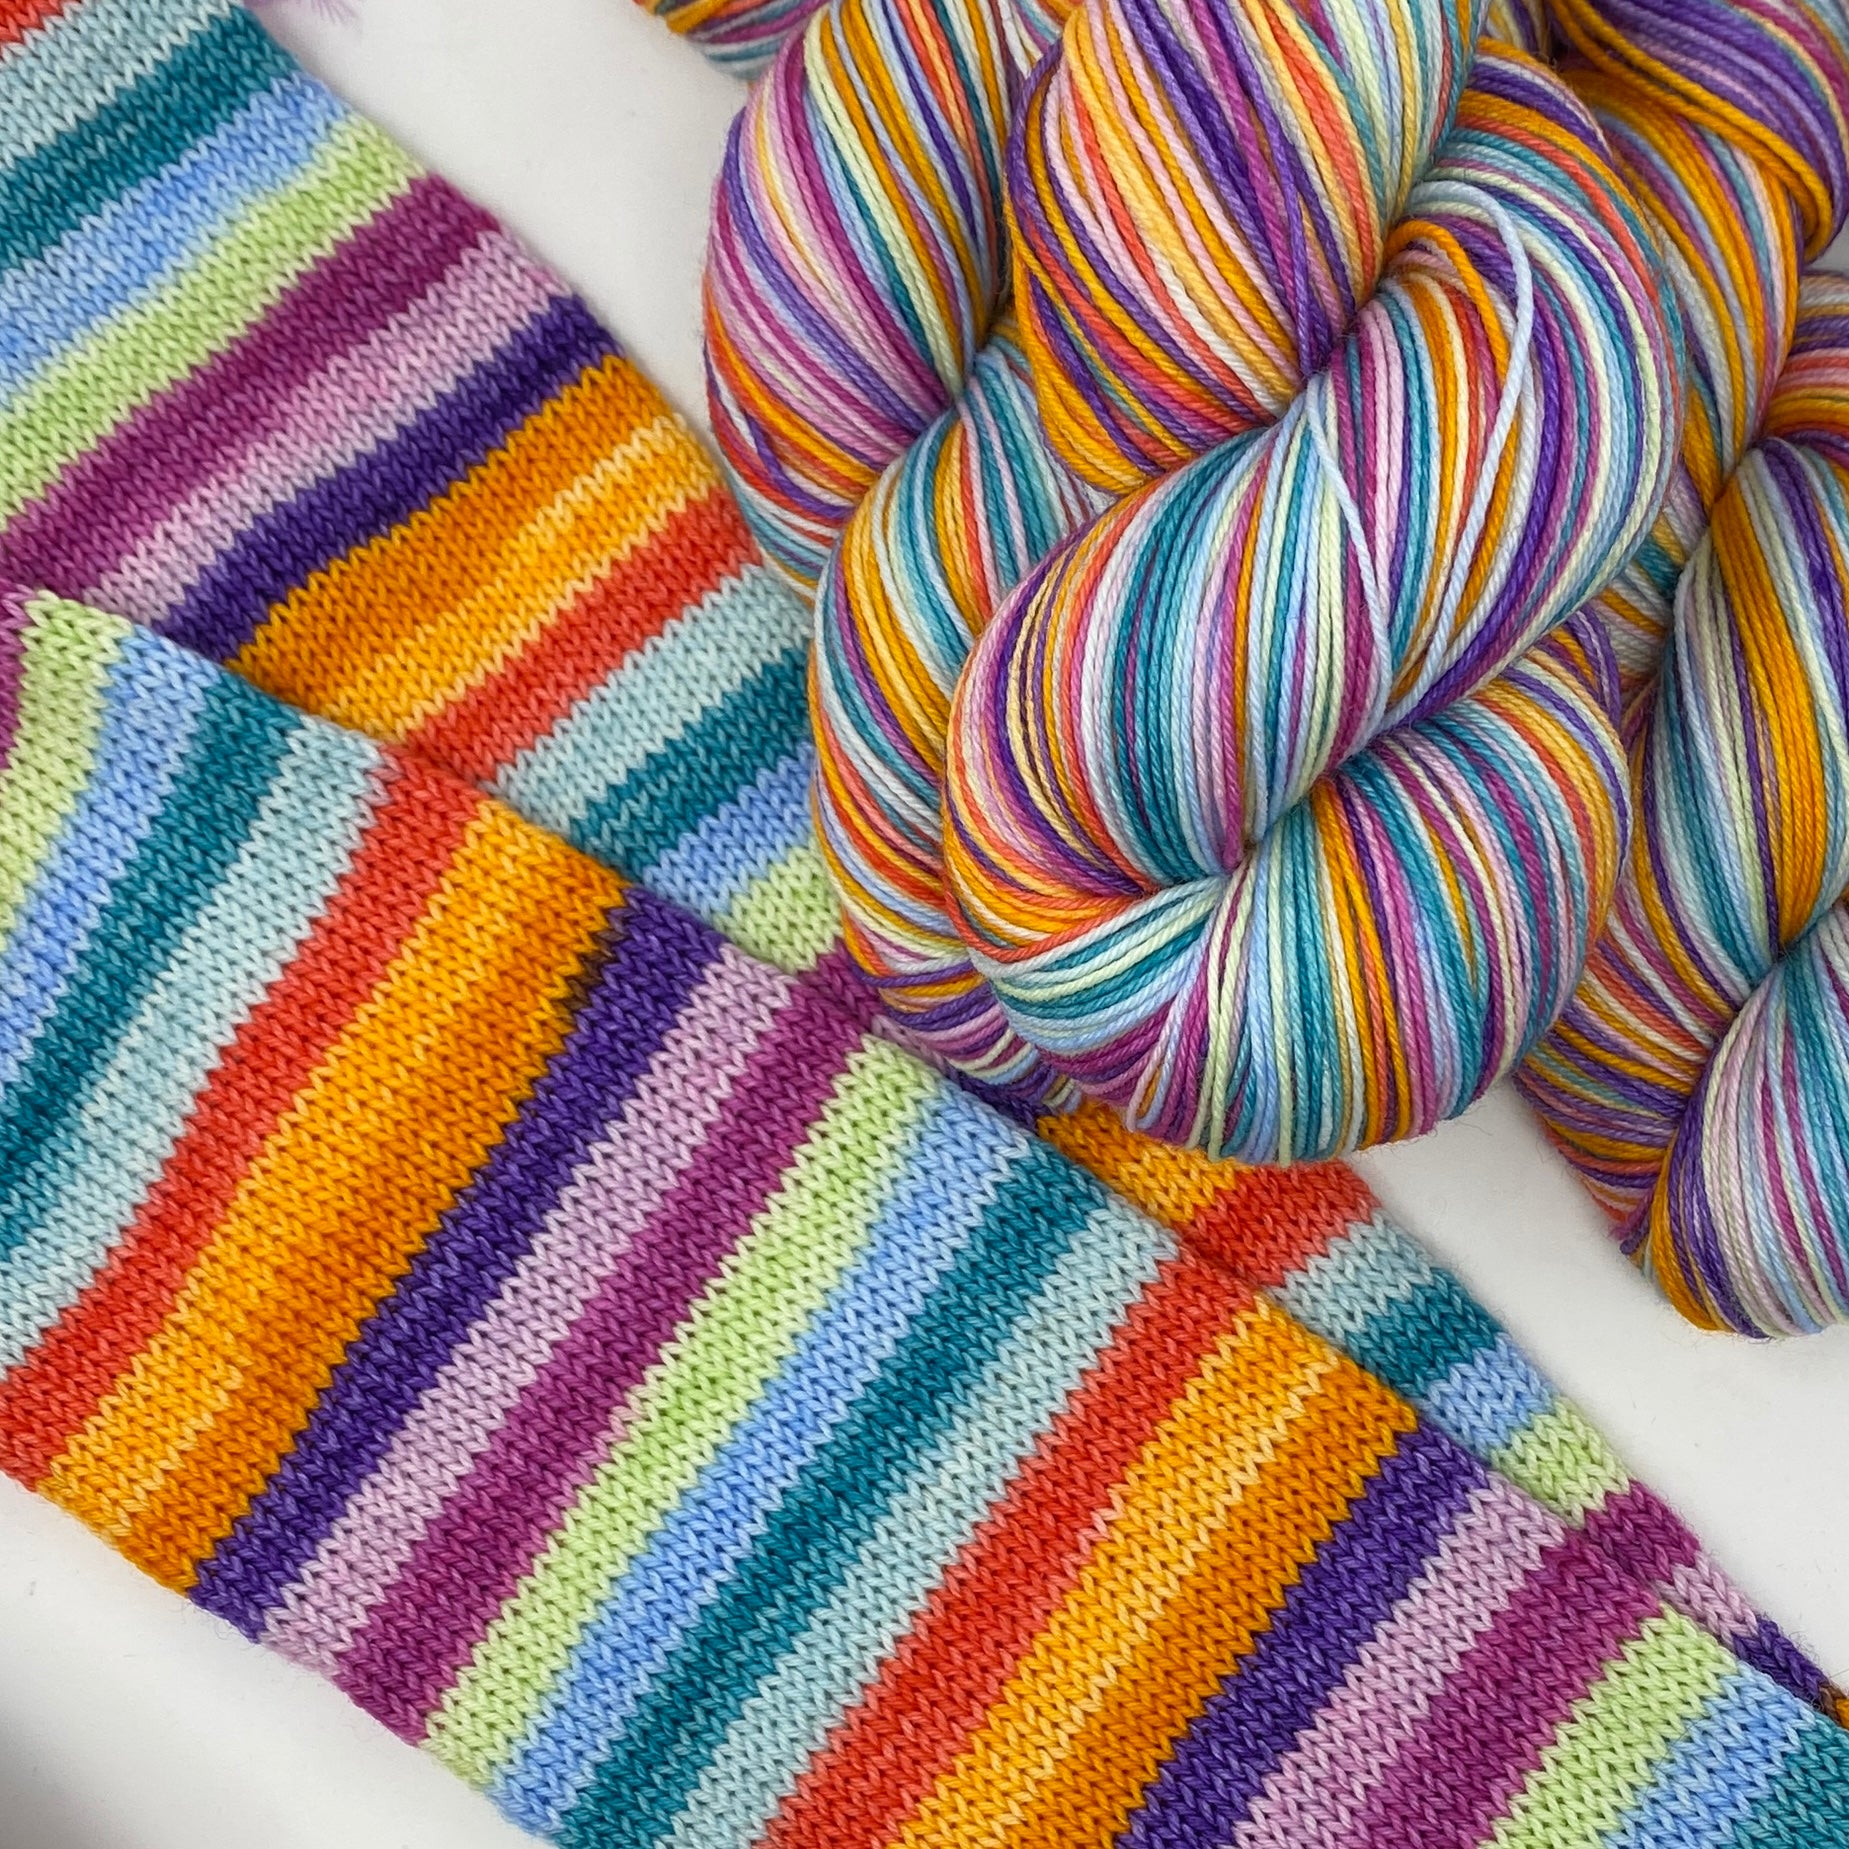 How to Dye Self Striping Yarn by